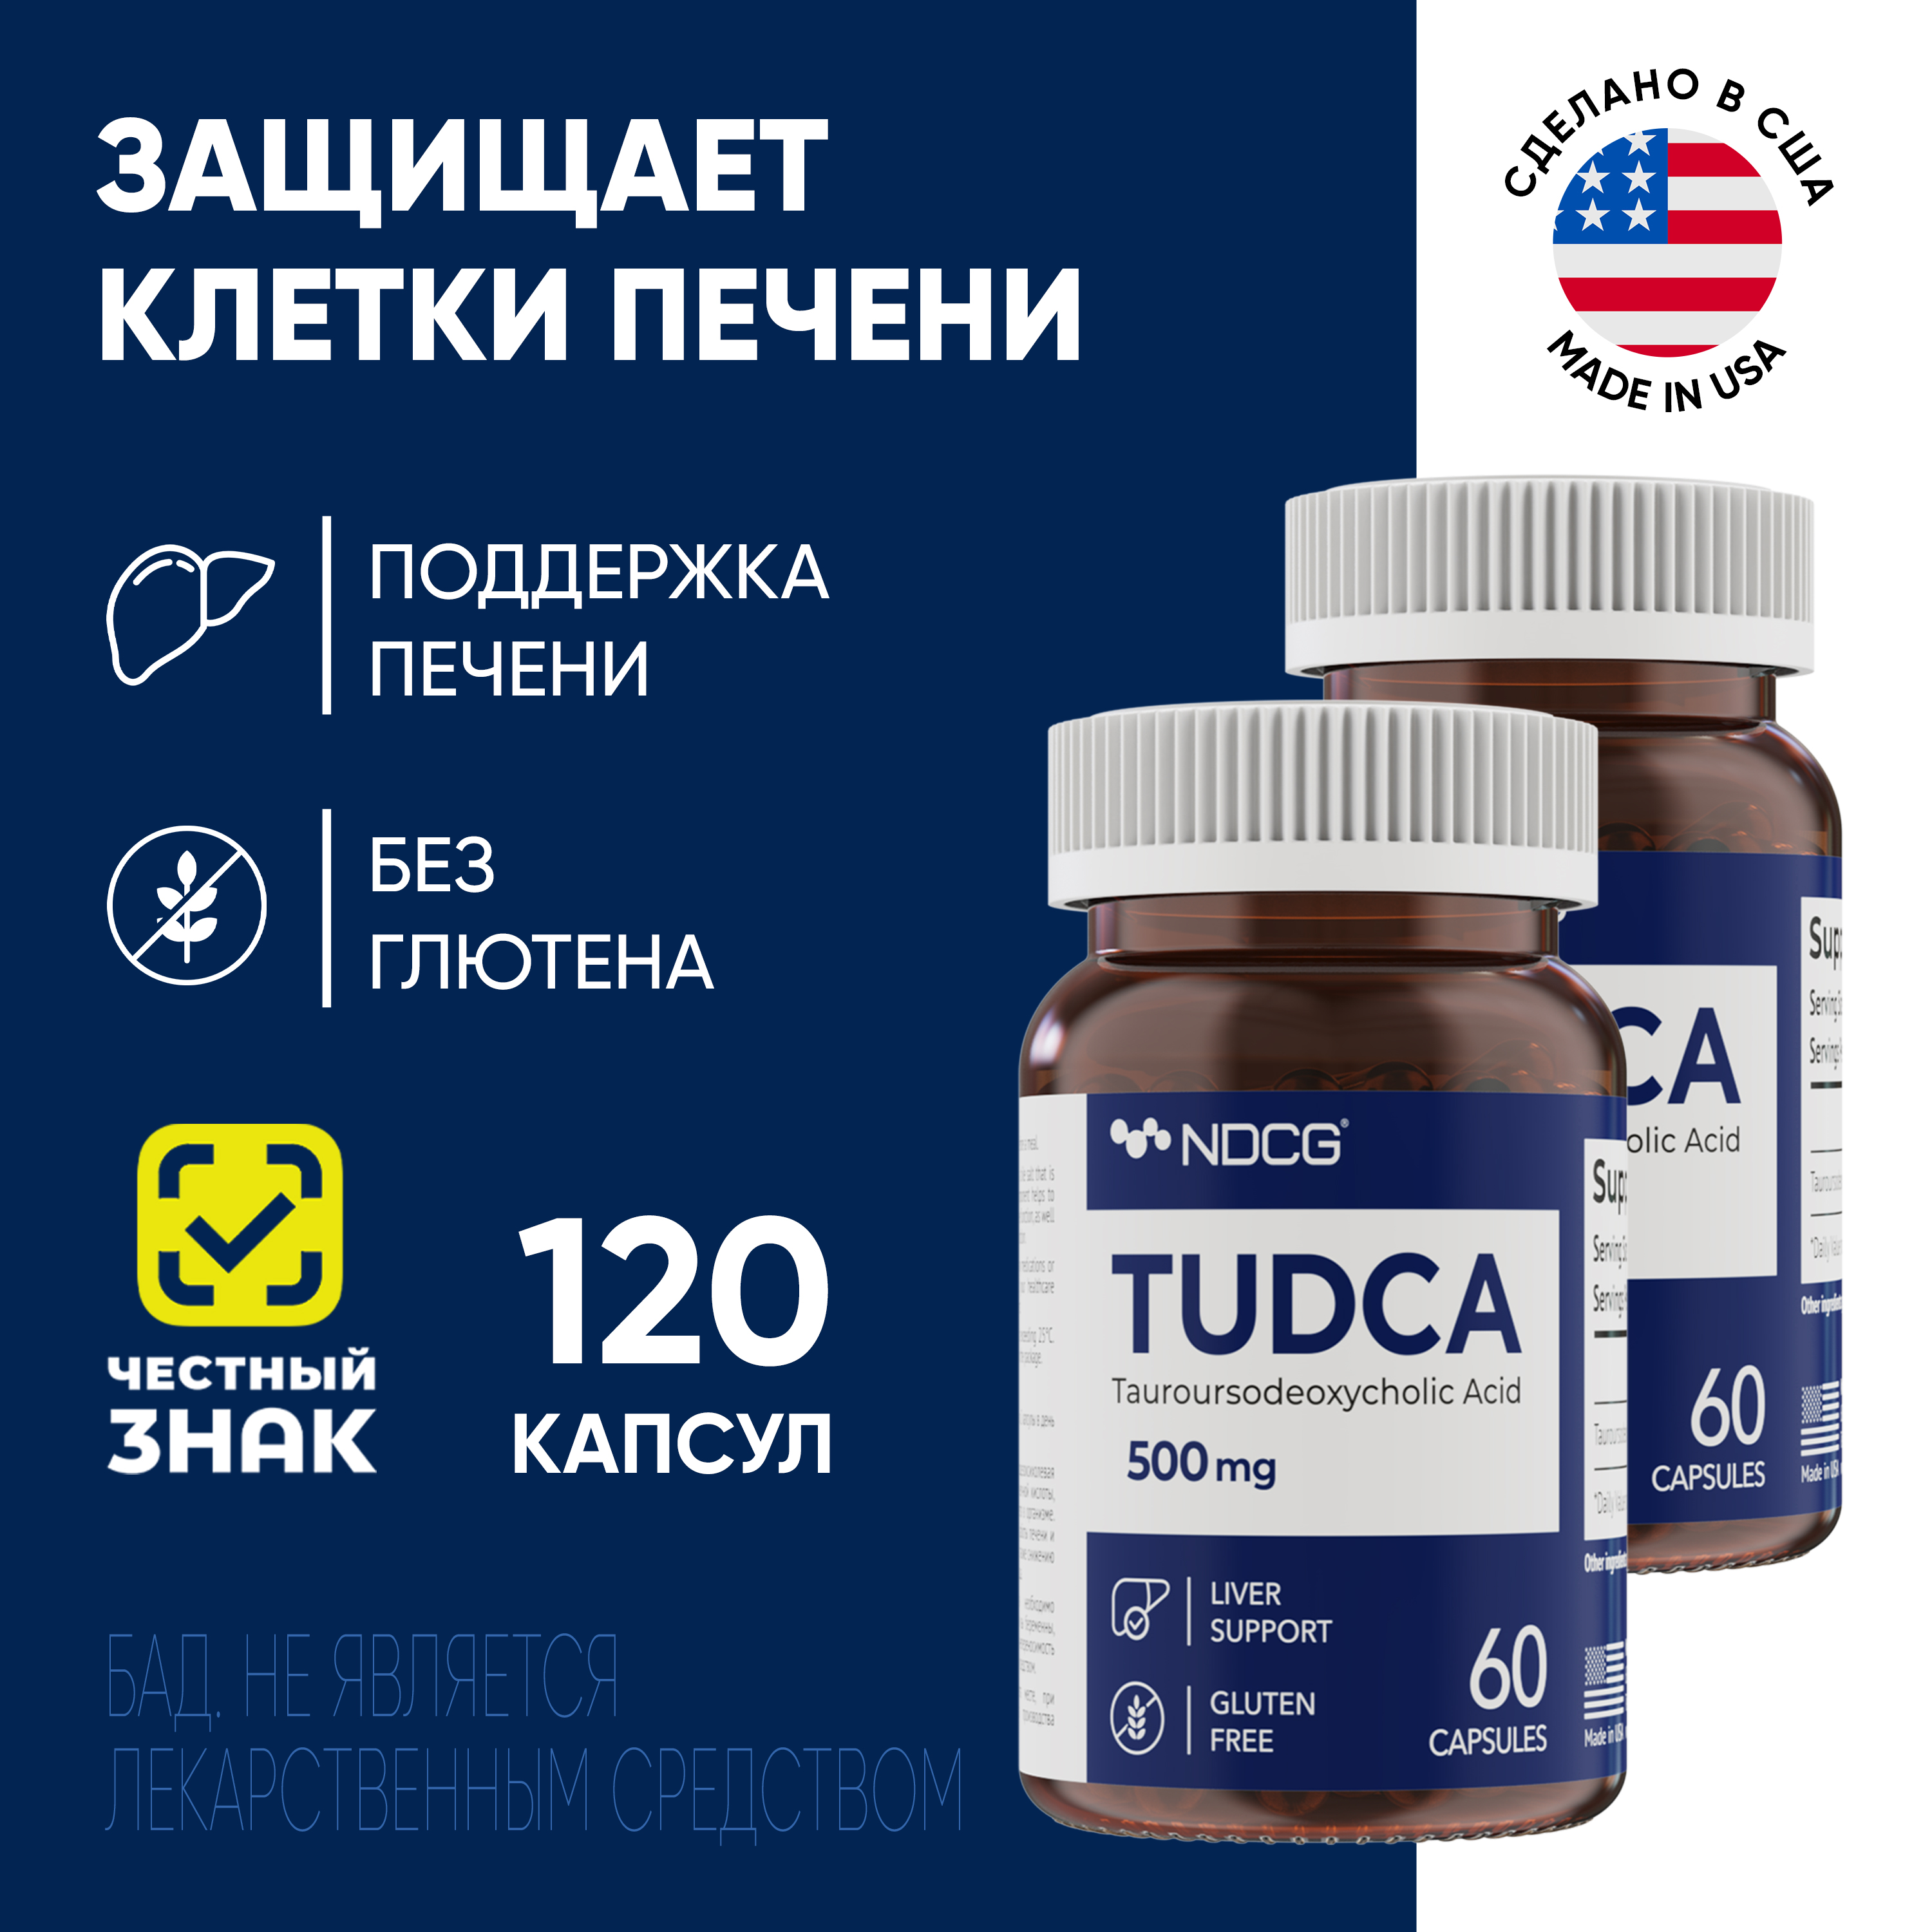 Комплект Тудка NDCG TUDCA 500 мг 60 капсул, 2 упаковки